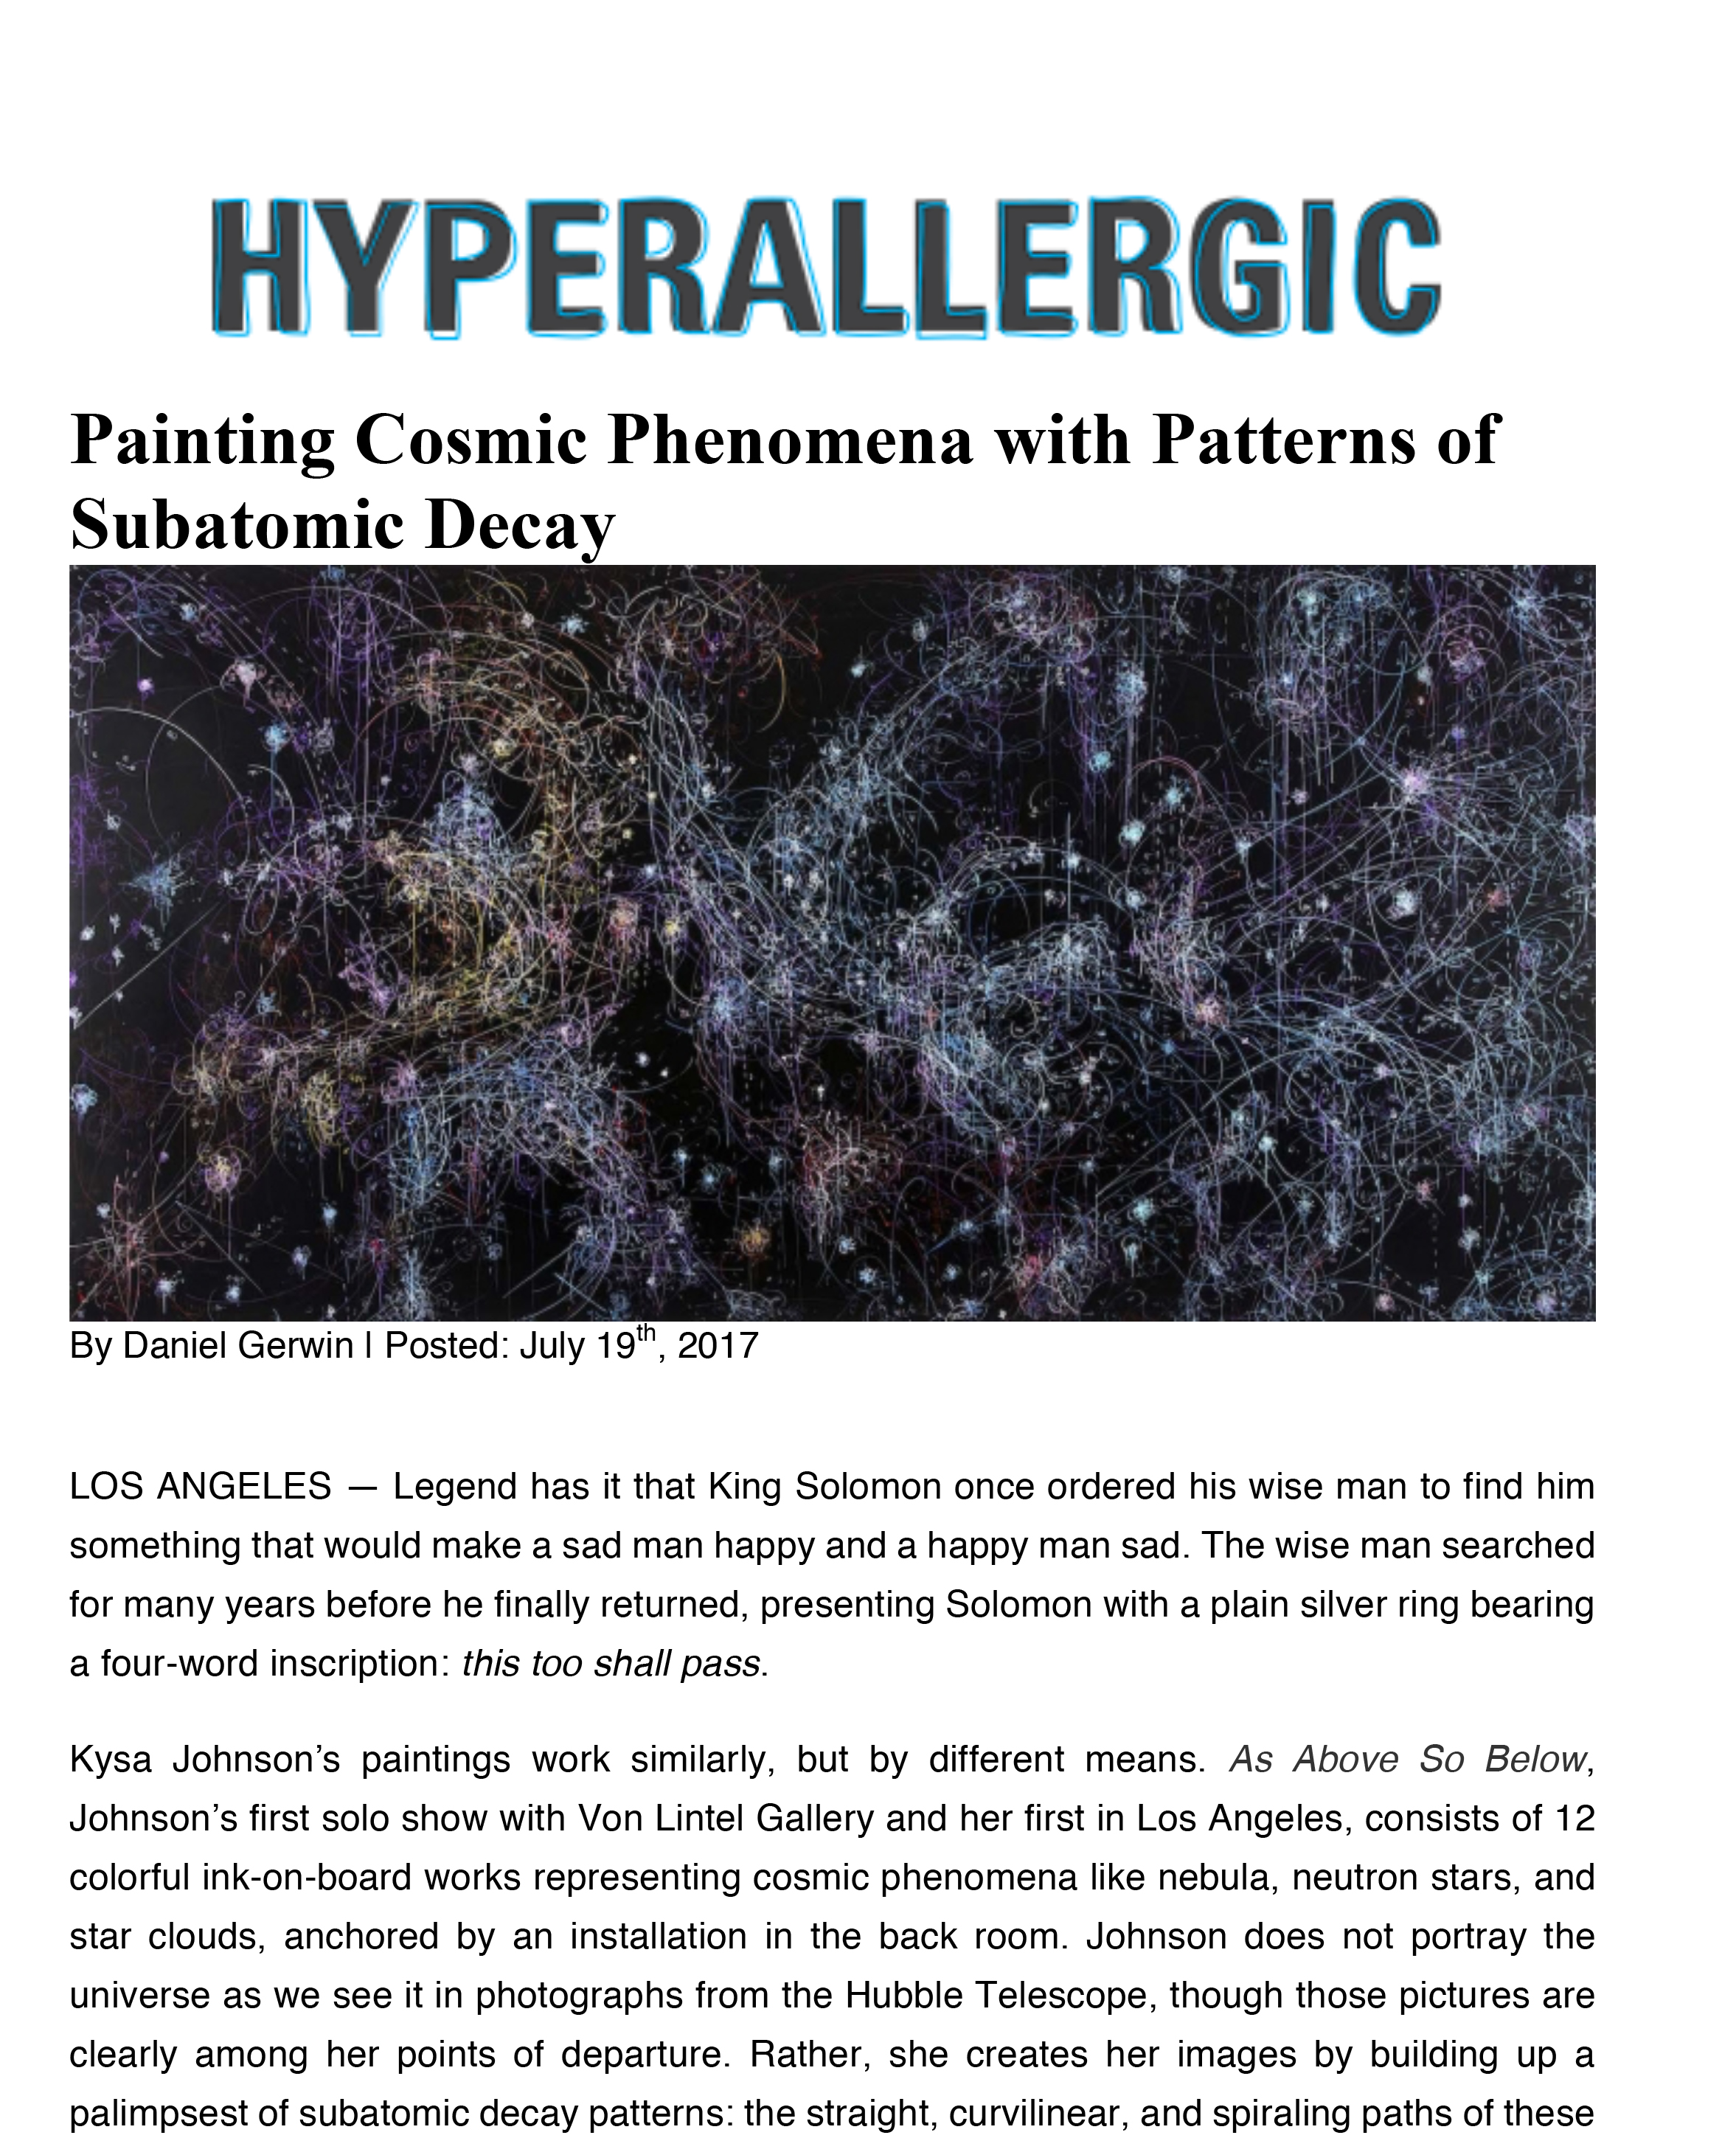 Hyperallergic - Painting Cosmic Phenomena with Patterns of Subatomic Decay